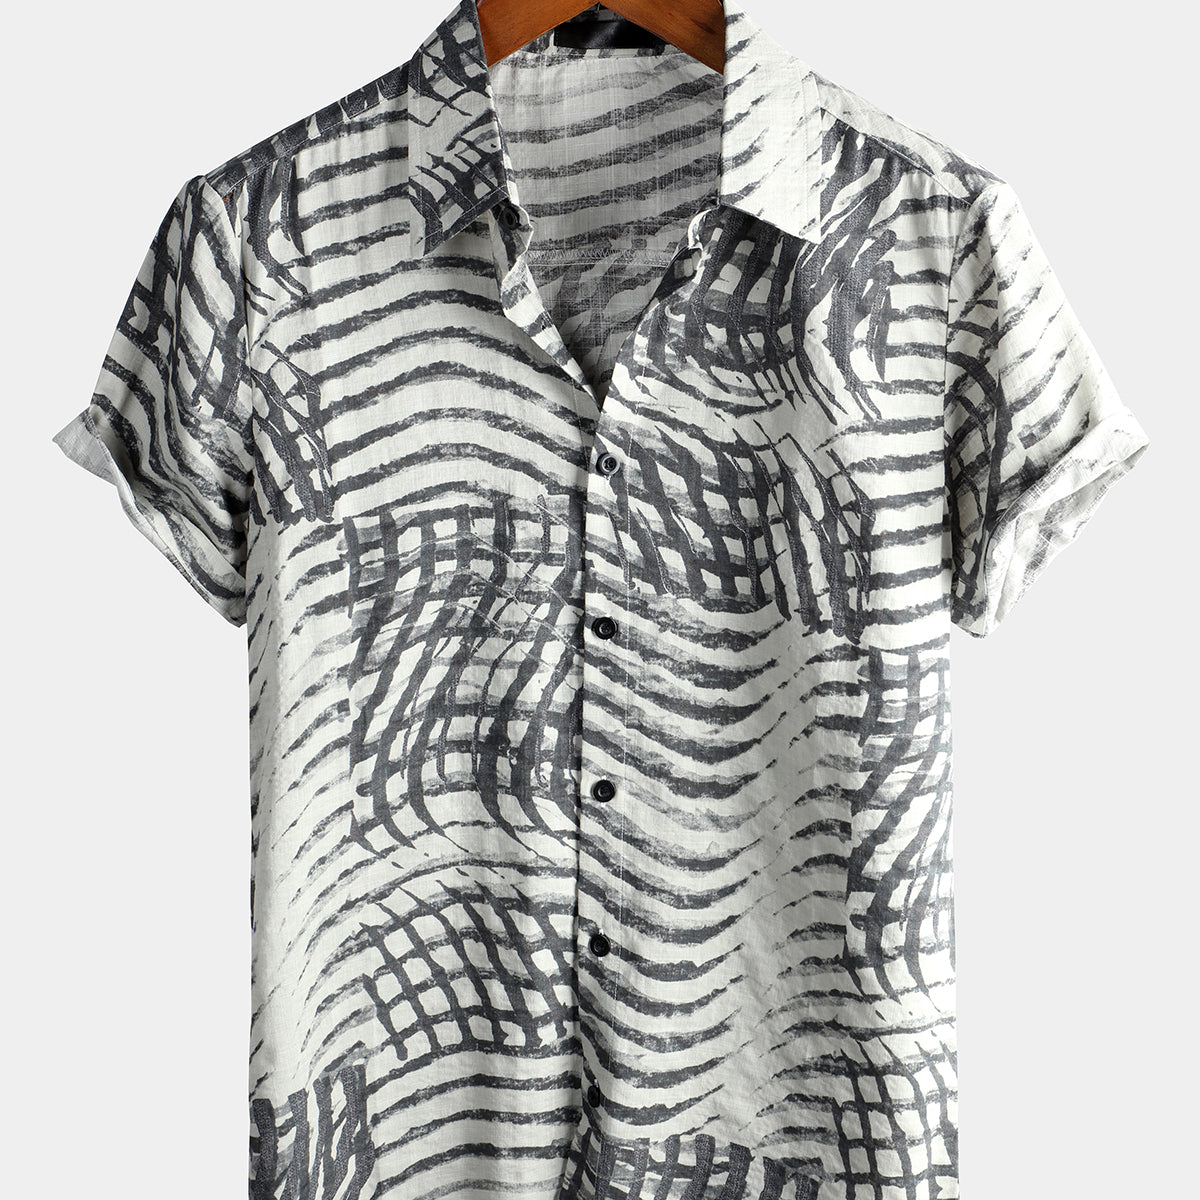 Men's Short Sleeve Striped Printed Retro Shirt